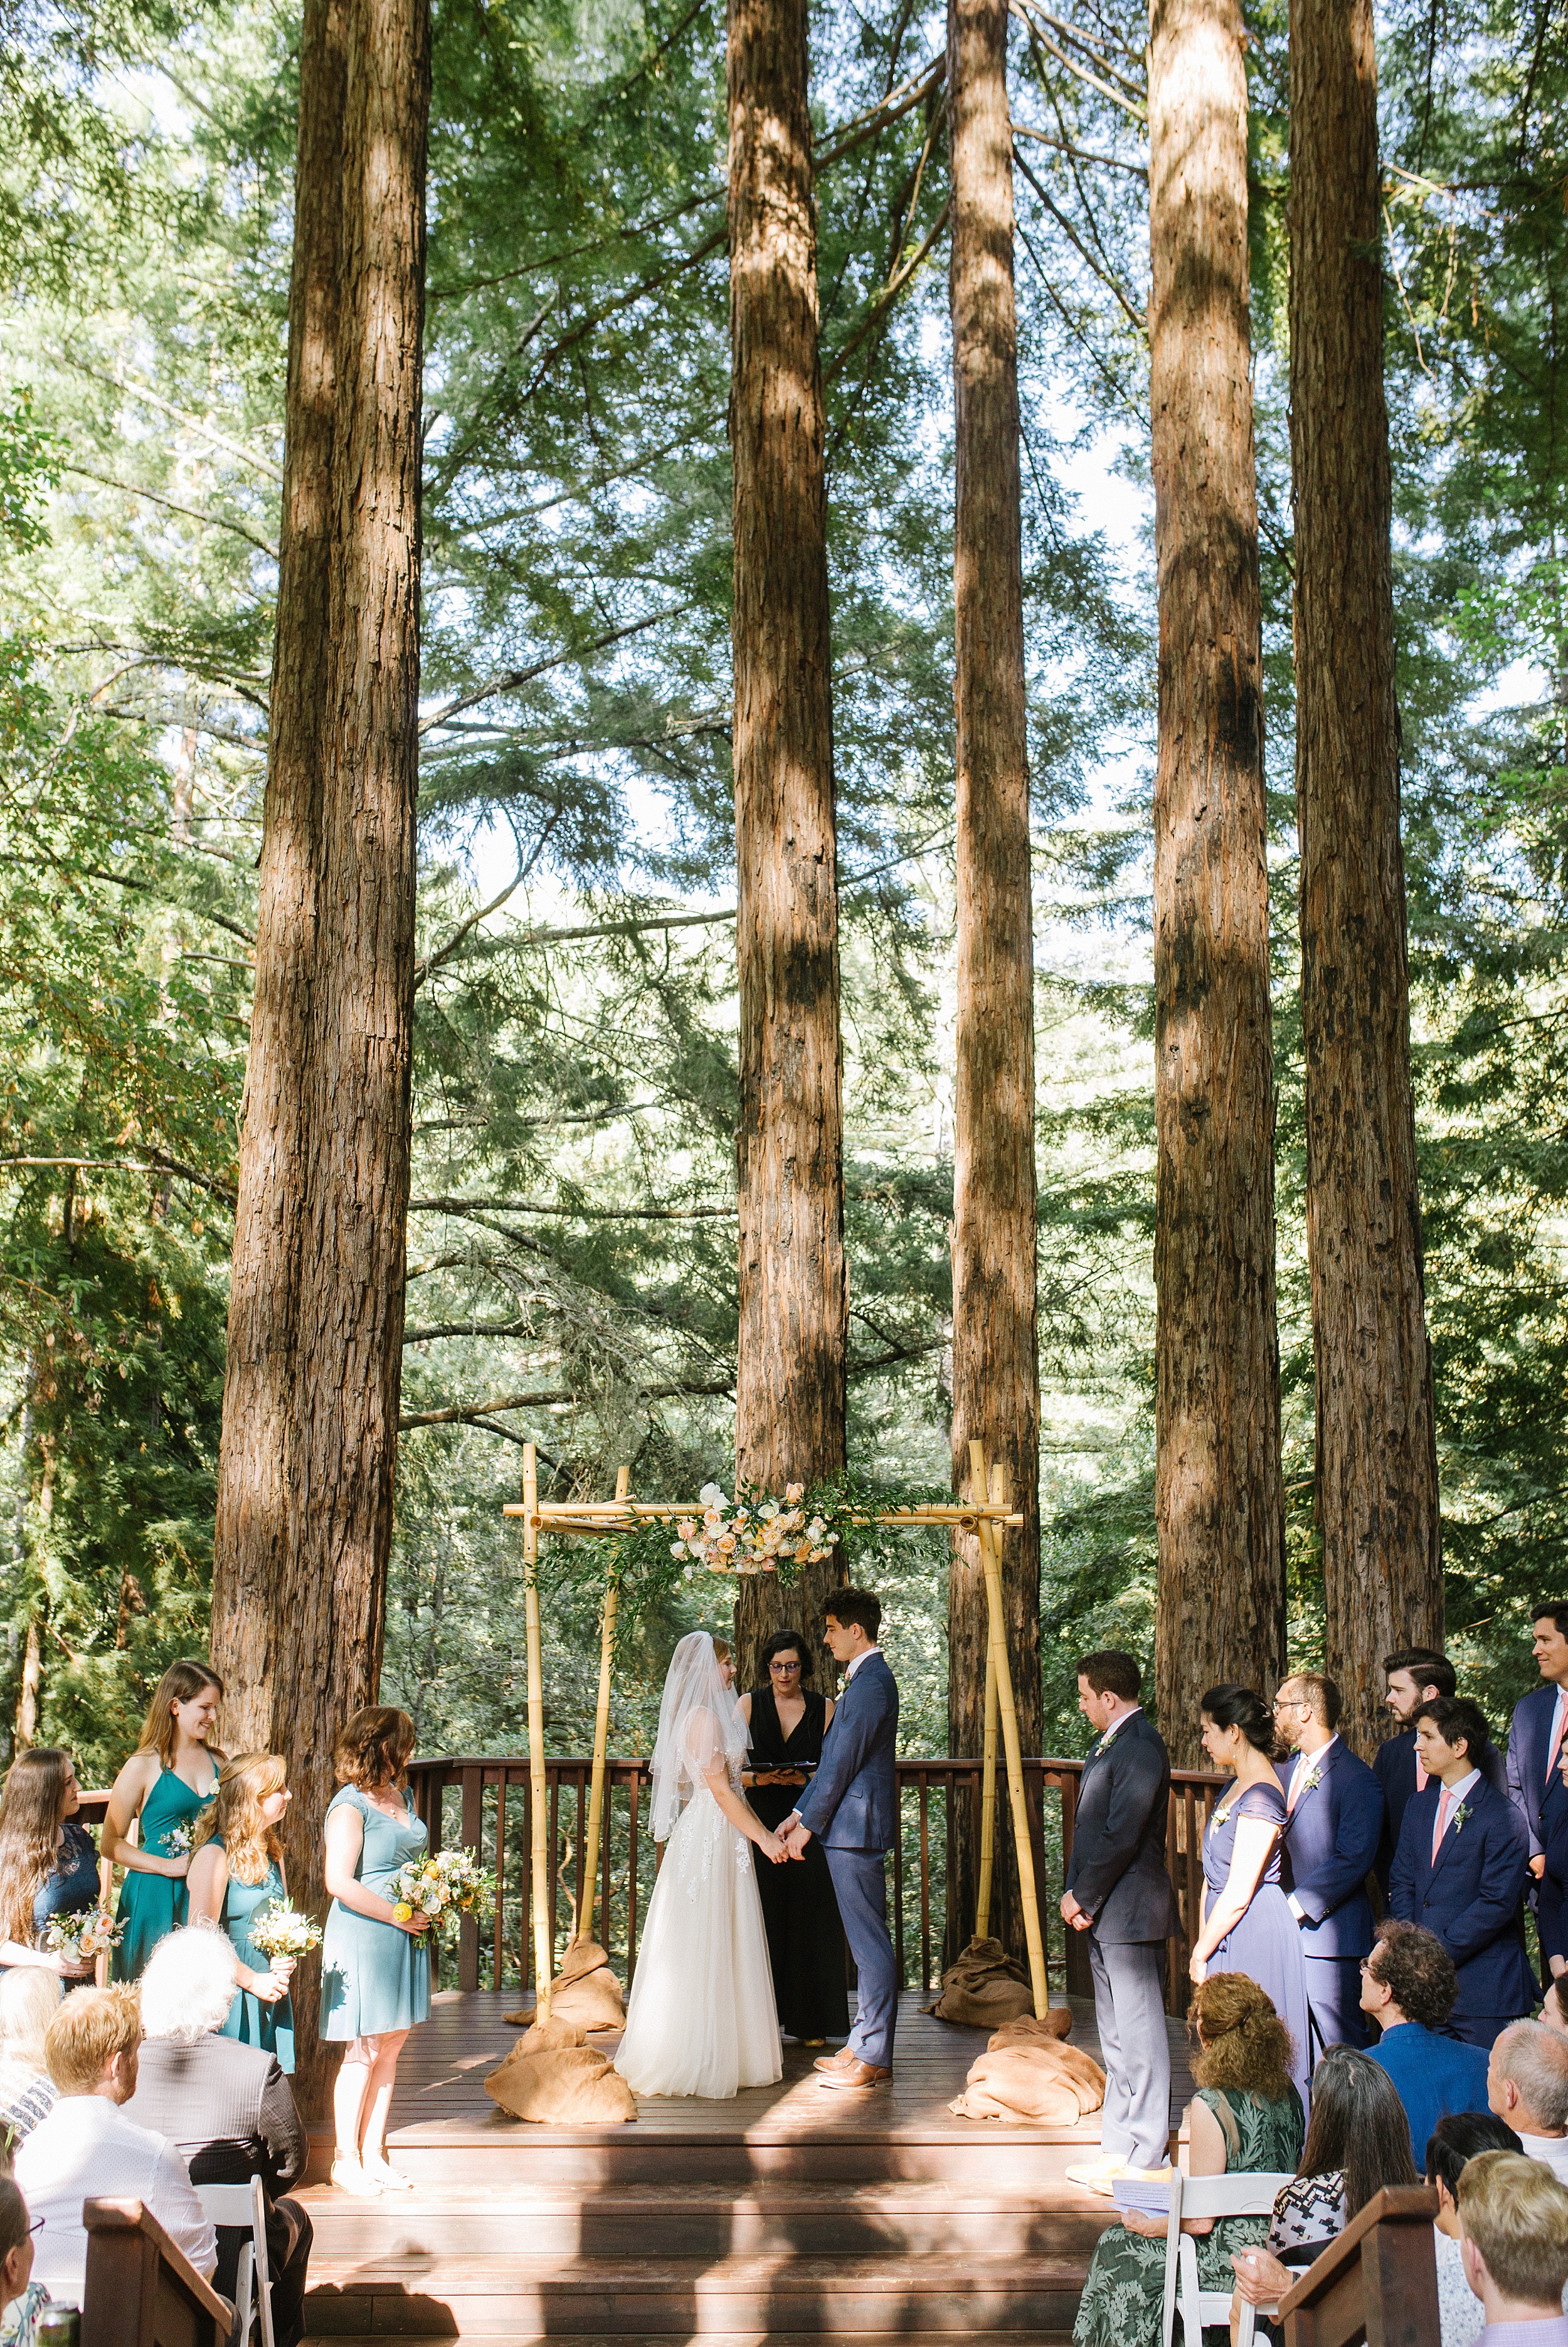 Amphitheatre-of-the-Redwoods-wedding-erikariley_chelsea-dier-photography_0019.jpg